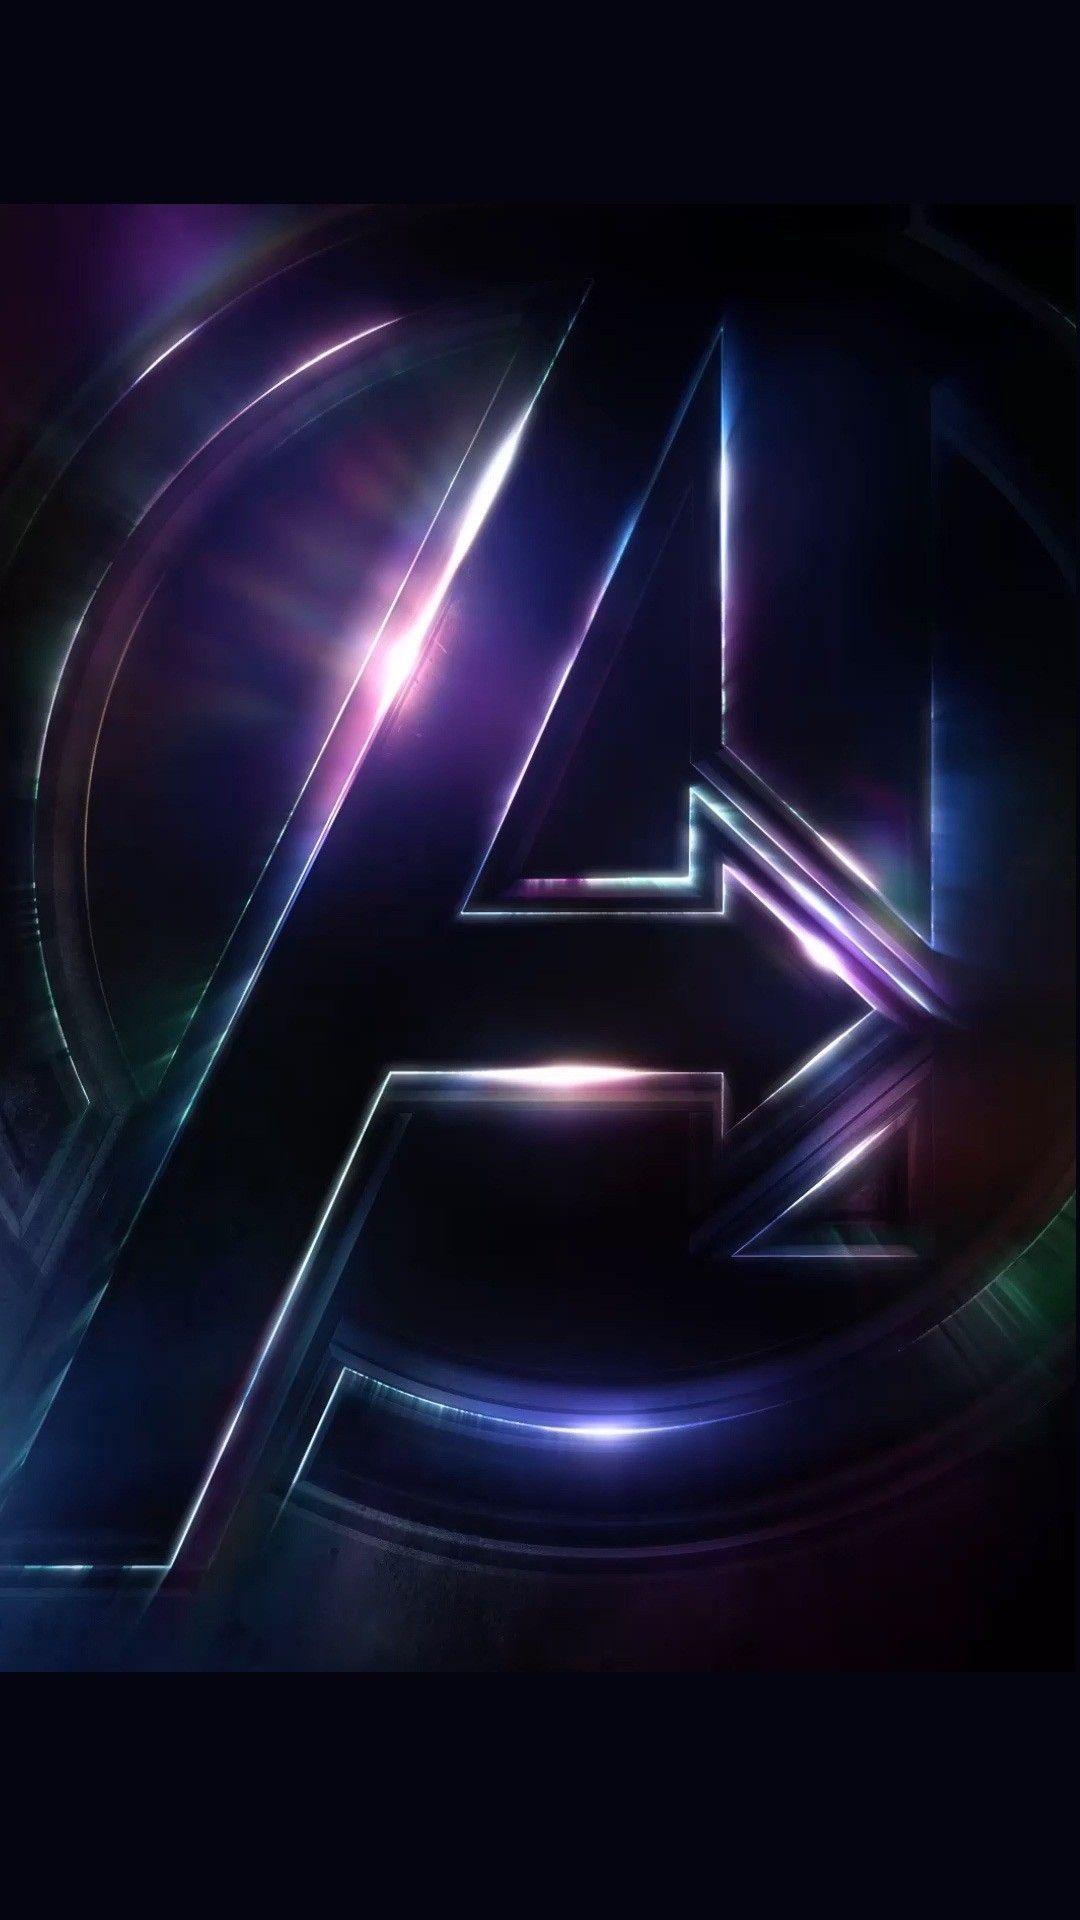 4k uhd avengers poster infinity war wallpaper decor. Android